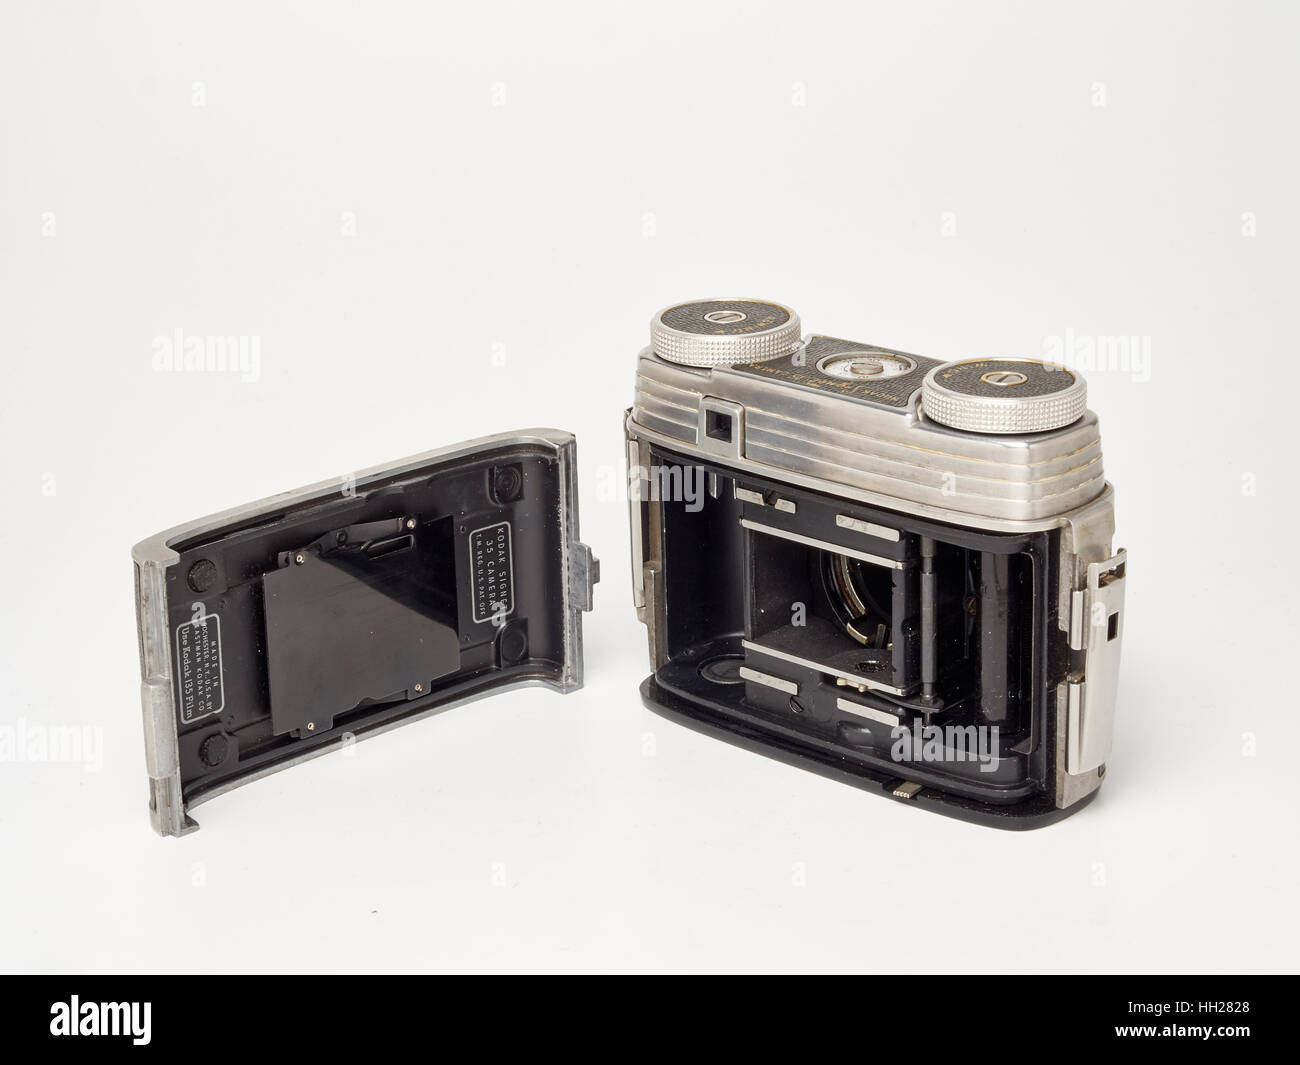 Kodak-Signet 35 analogen Filmkamera Stockfoto